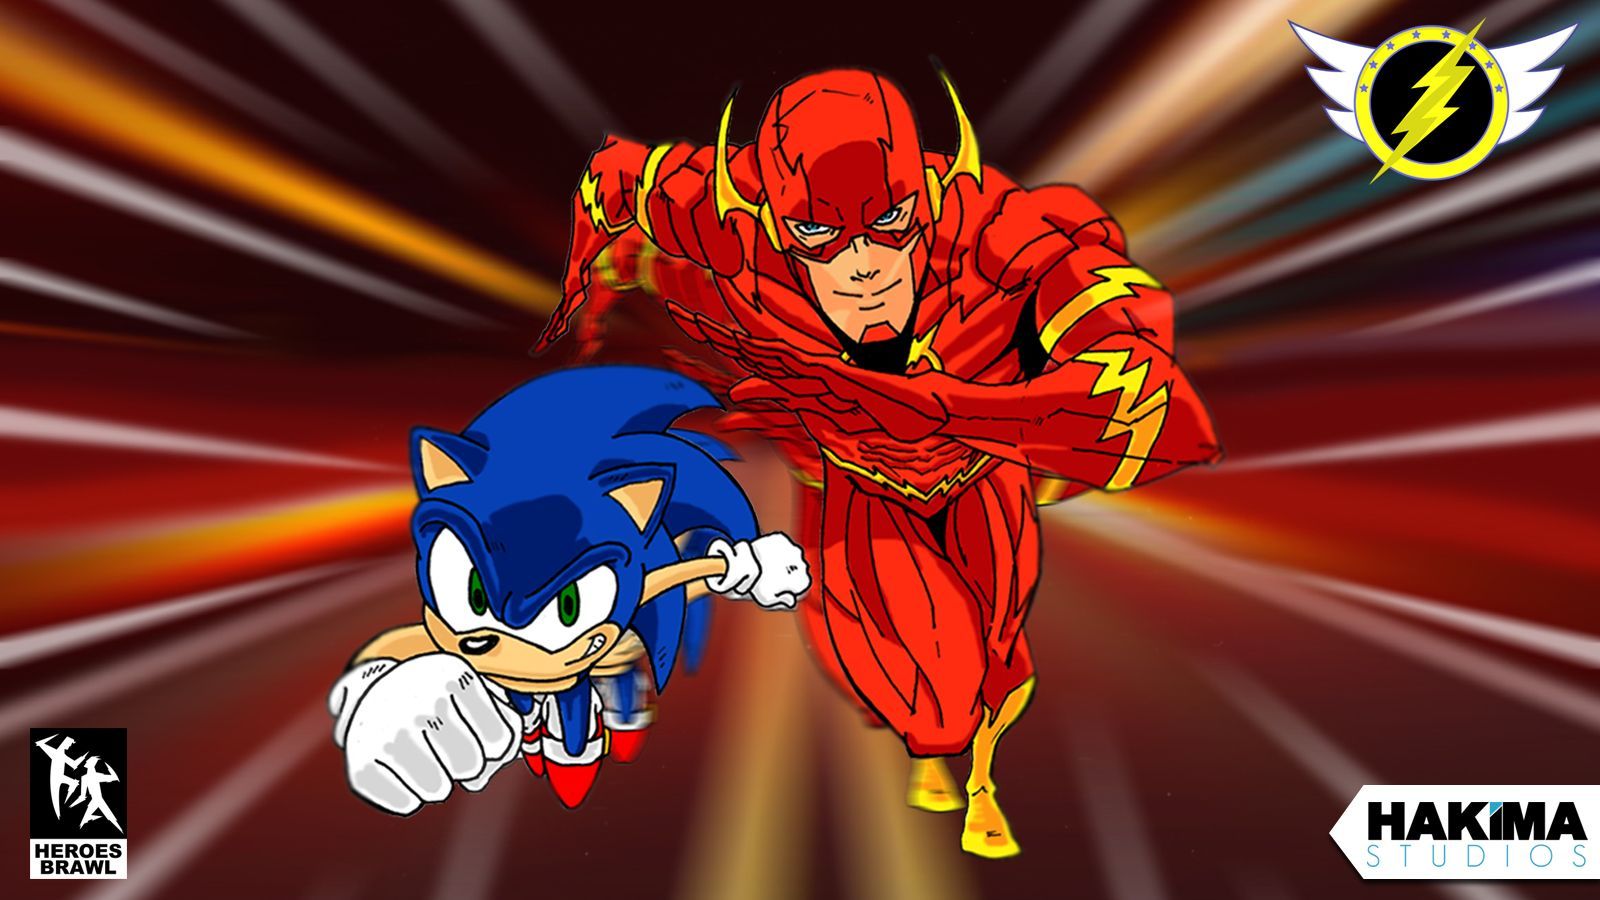 Sonic Vs The Flash Wallpaper 1600 x 900 Version 3 « Hakima Studios